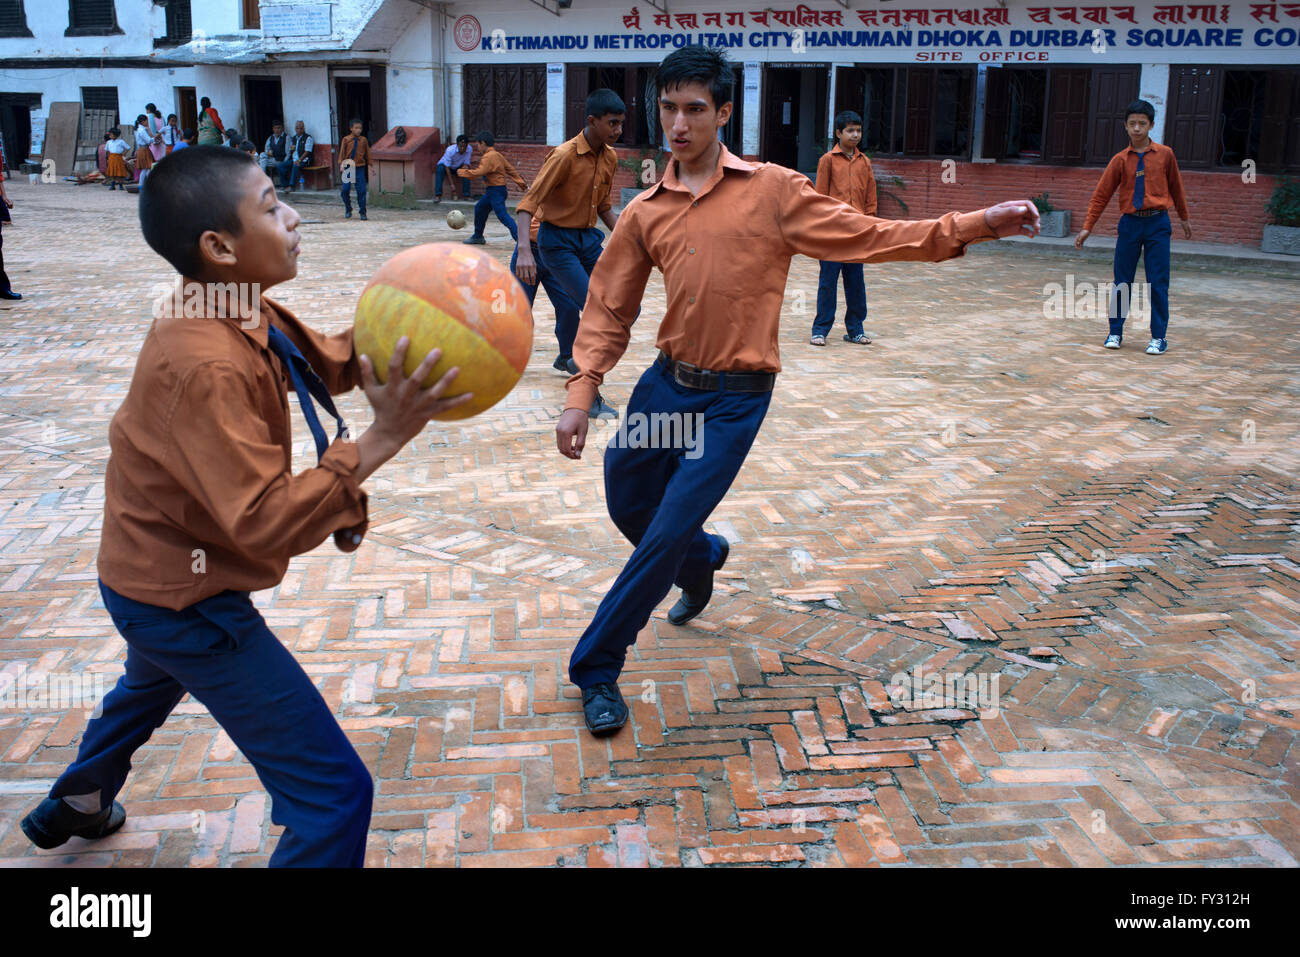 Studenti locali che giocare con una palla di Kathmandu in città metropolitana Hanuman Dhoka Durbar Square, Kathmandu, Nepal. Foto Stock